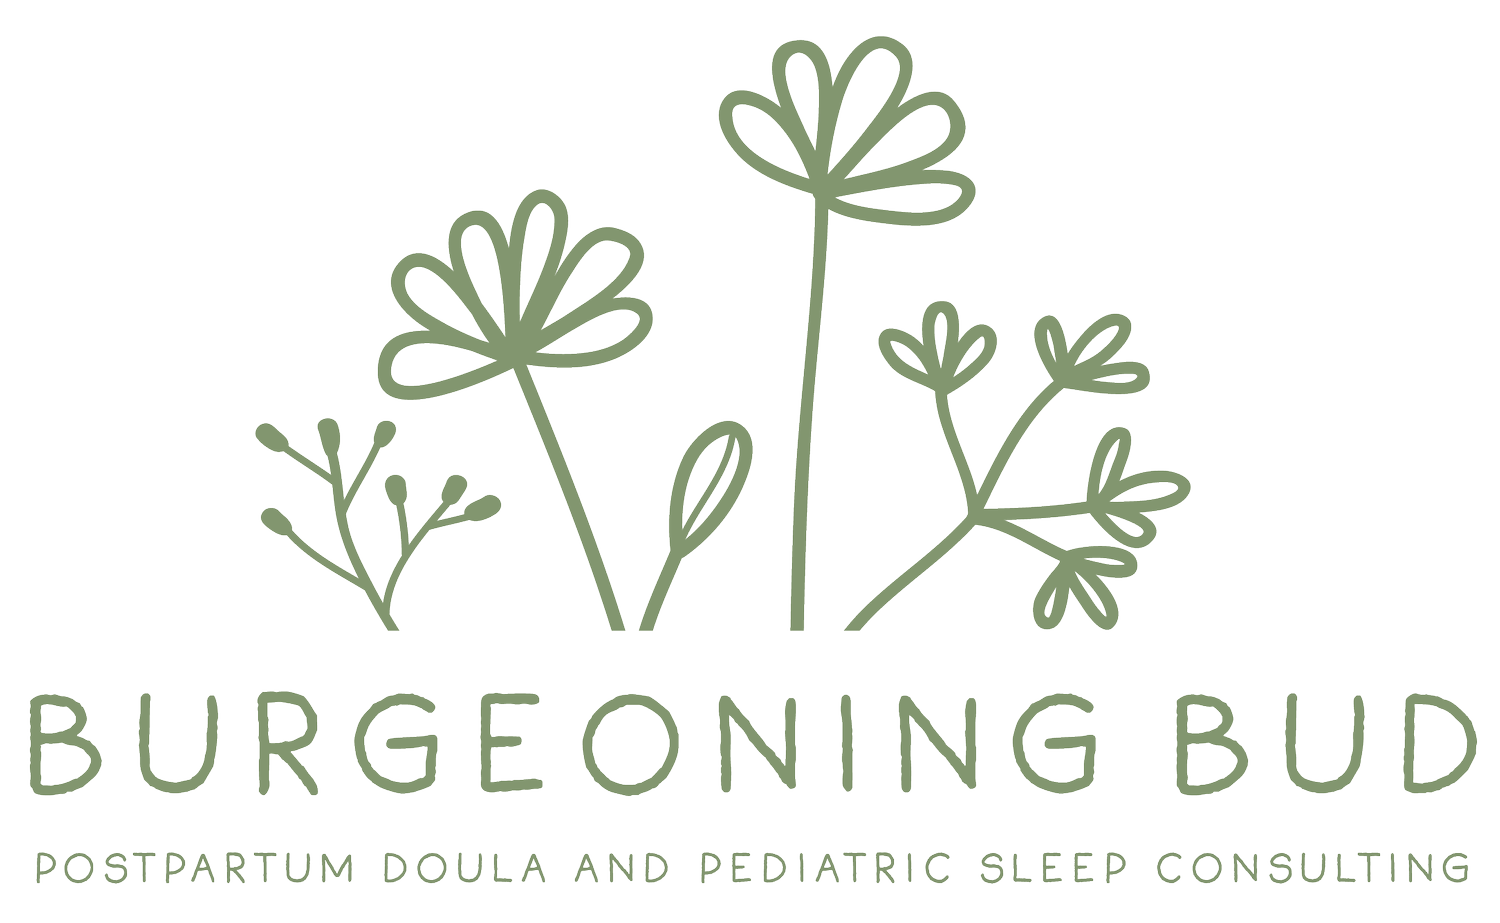 Burgeoning Bud Postpartum and Pediatric Sleep Consulting: Natick, MA